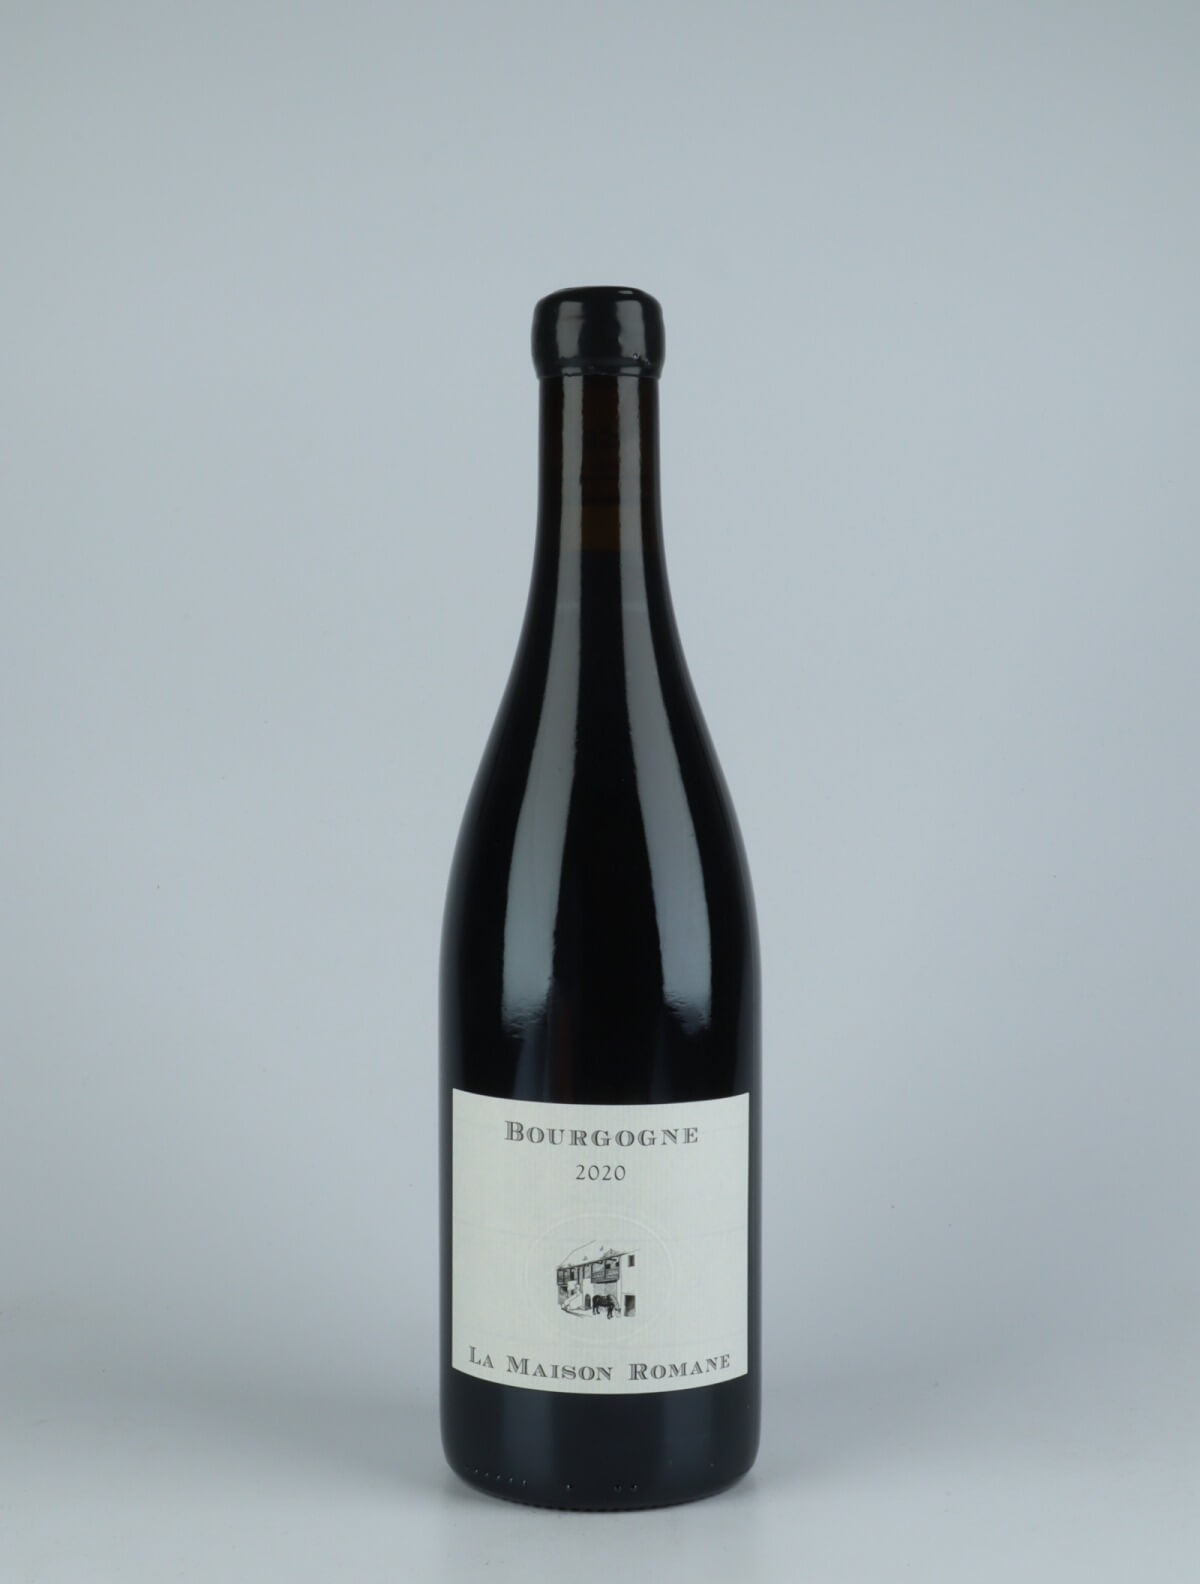 A bottle 2020 Bourgogne Rouge Red wine from La Maison Romane, Burgundy in France